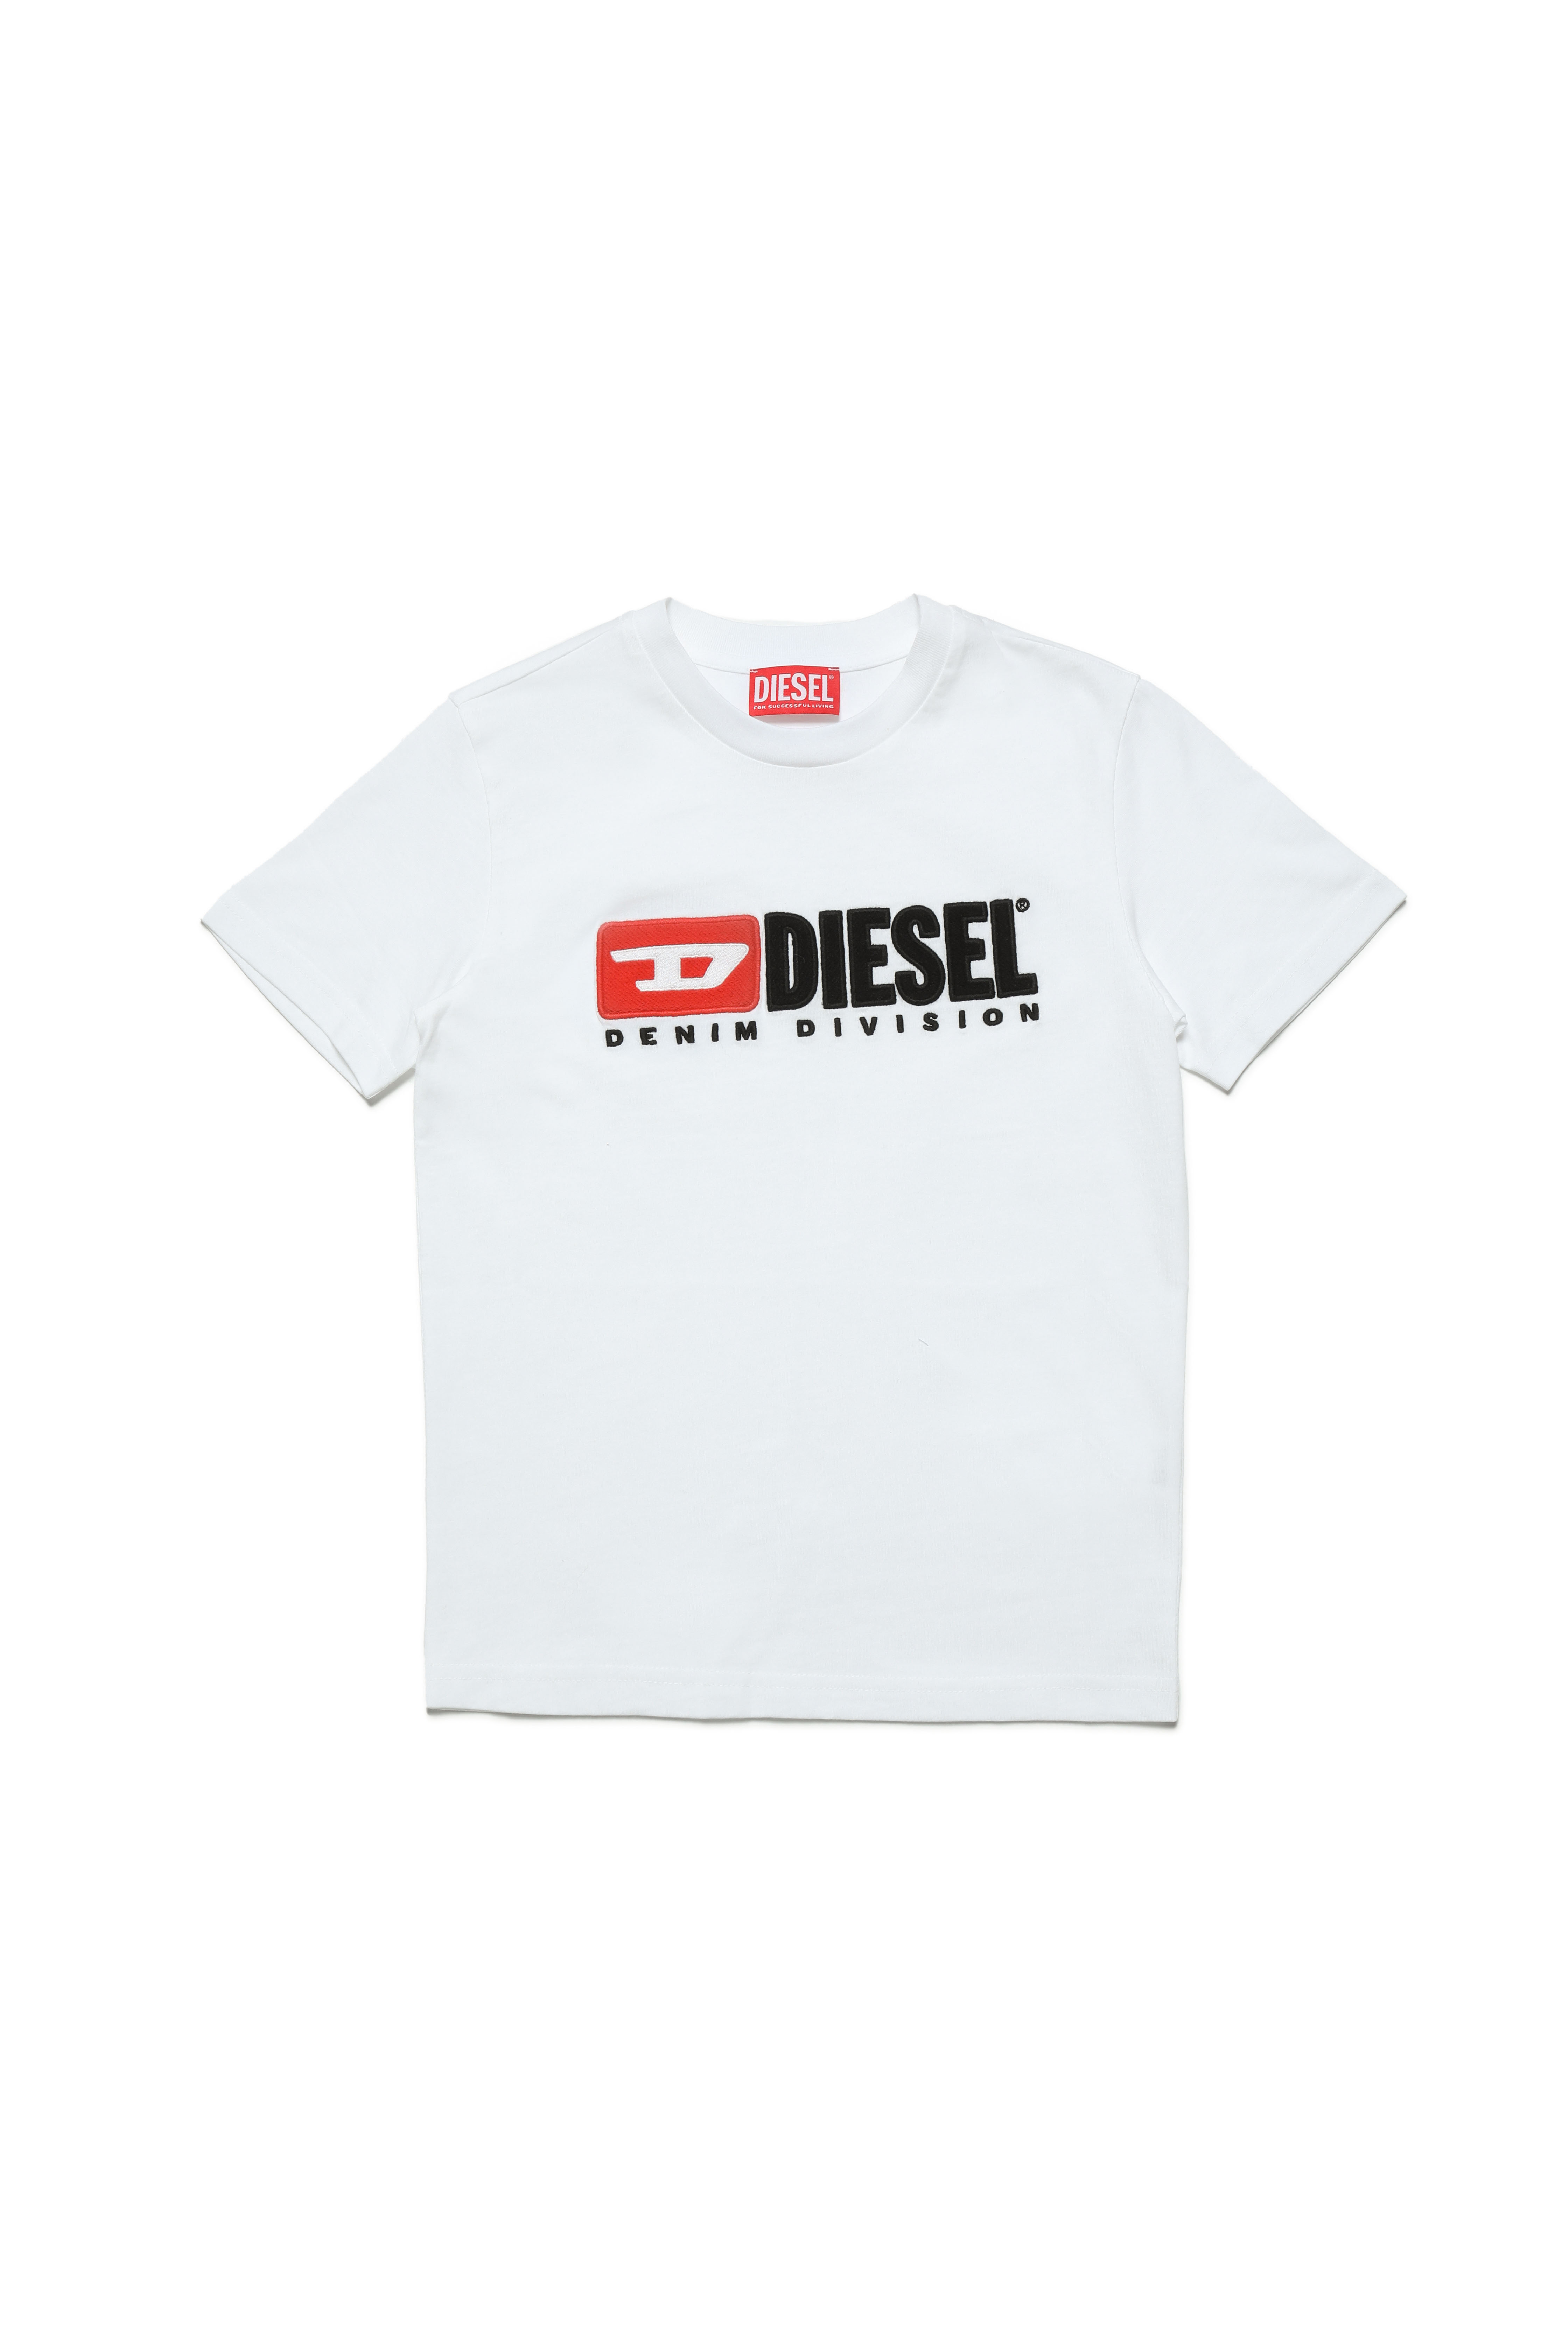 Diesel - TDIEGODIVE, Bianco - Image 1